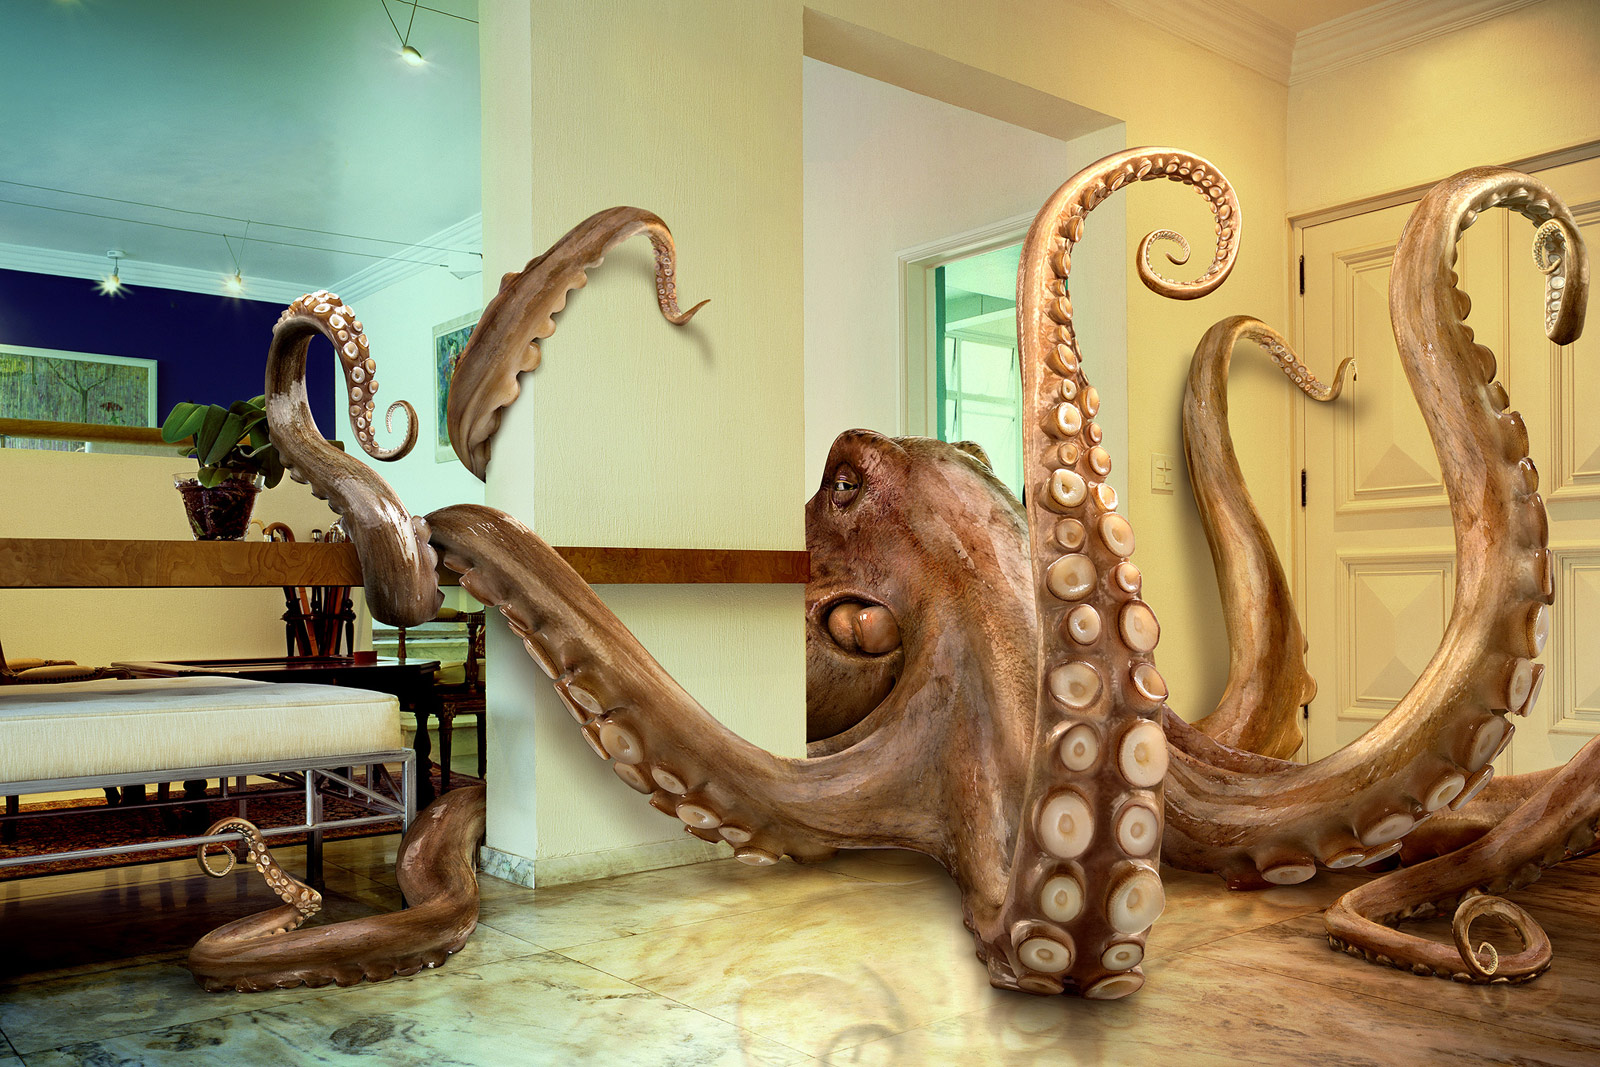 http://www.peterbe.com/plog/interior-octopus/octopus.jpg